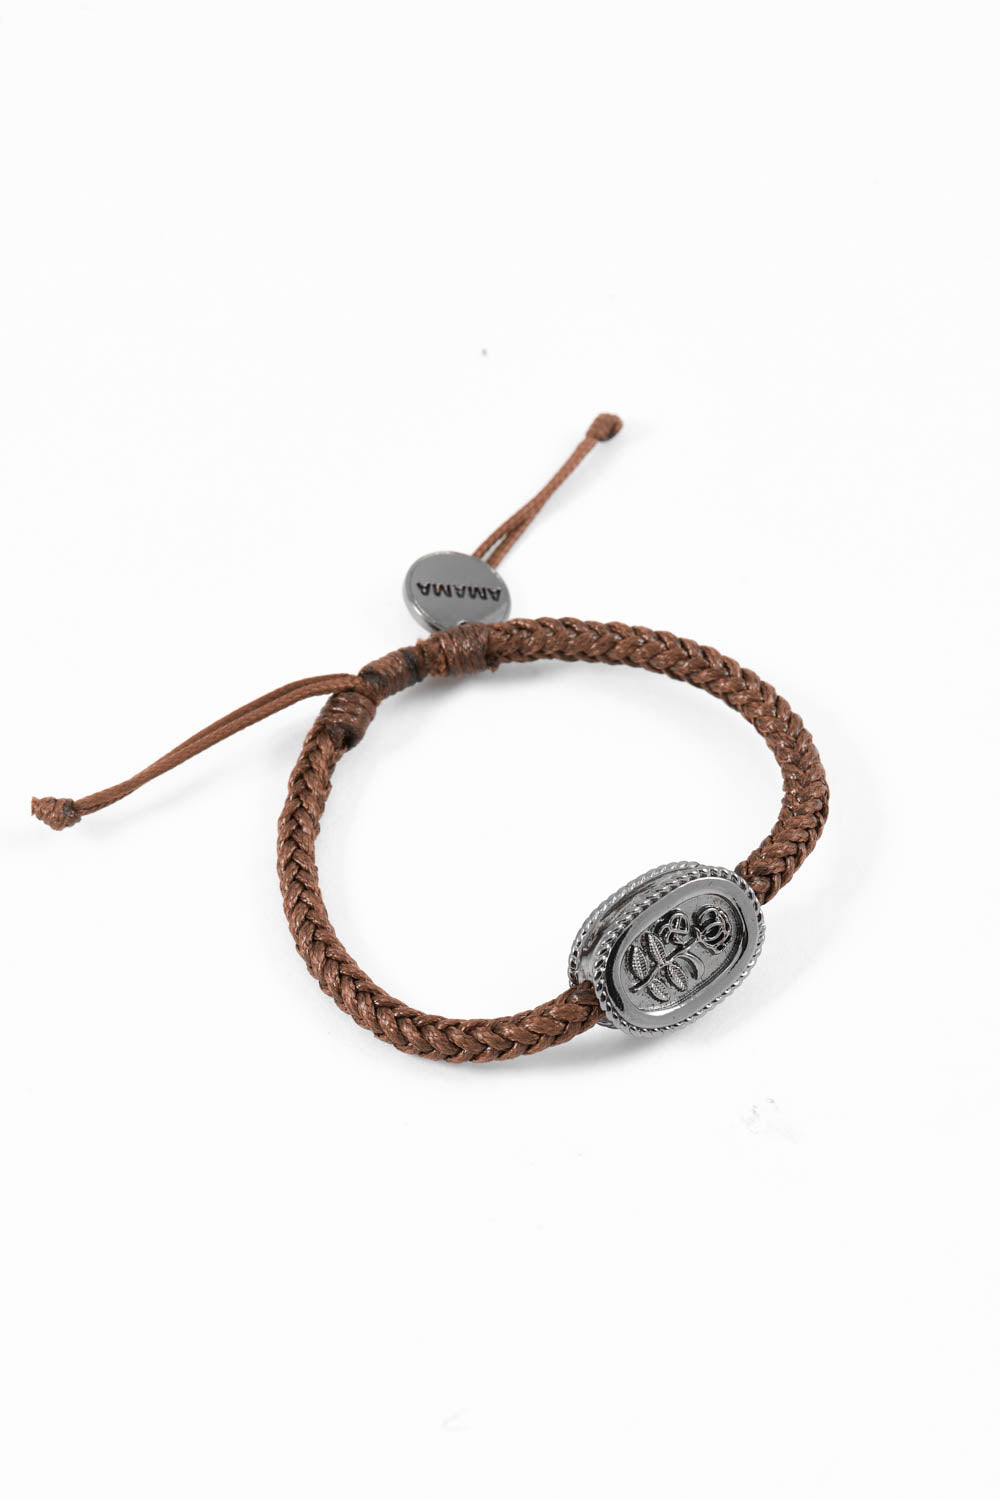 Amama,SubRosa Amulet Bracelet in Umber Brown